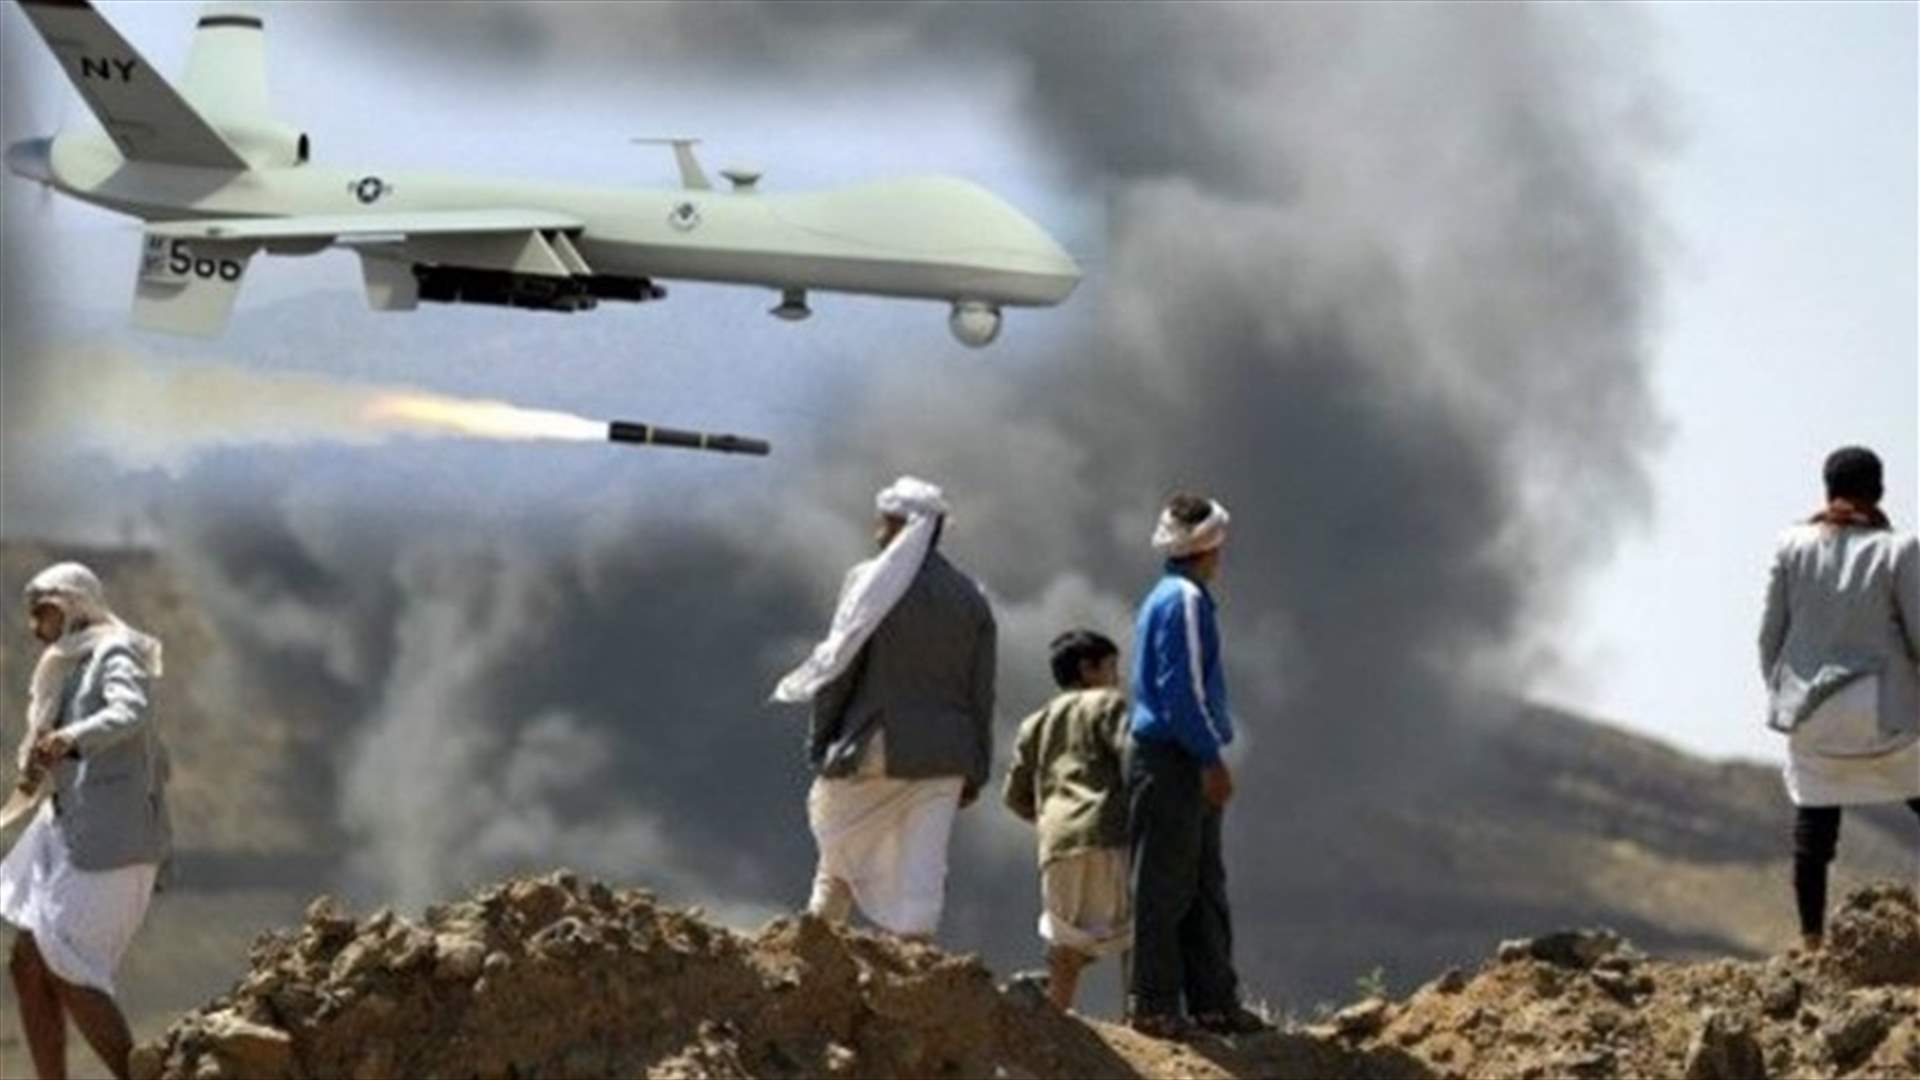 Drone strike on al Qaeda in Yemen kills 4 - residents and officials